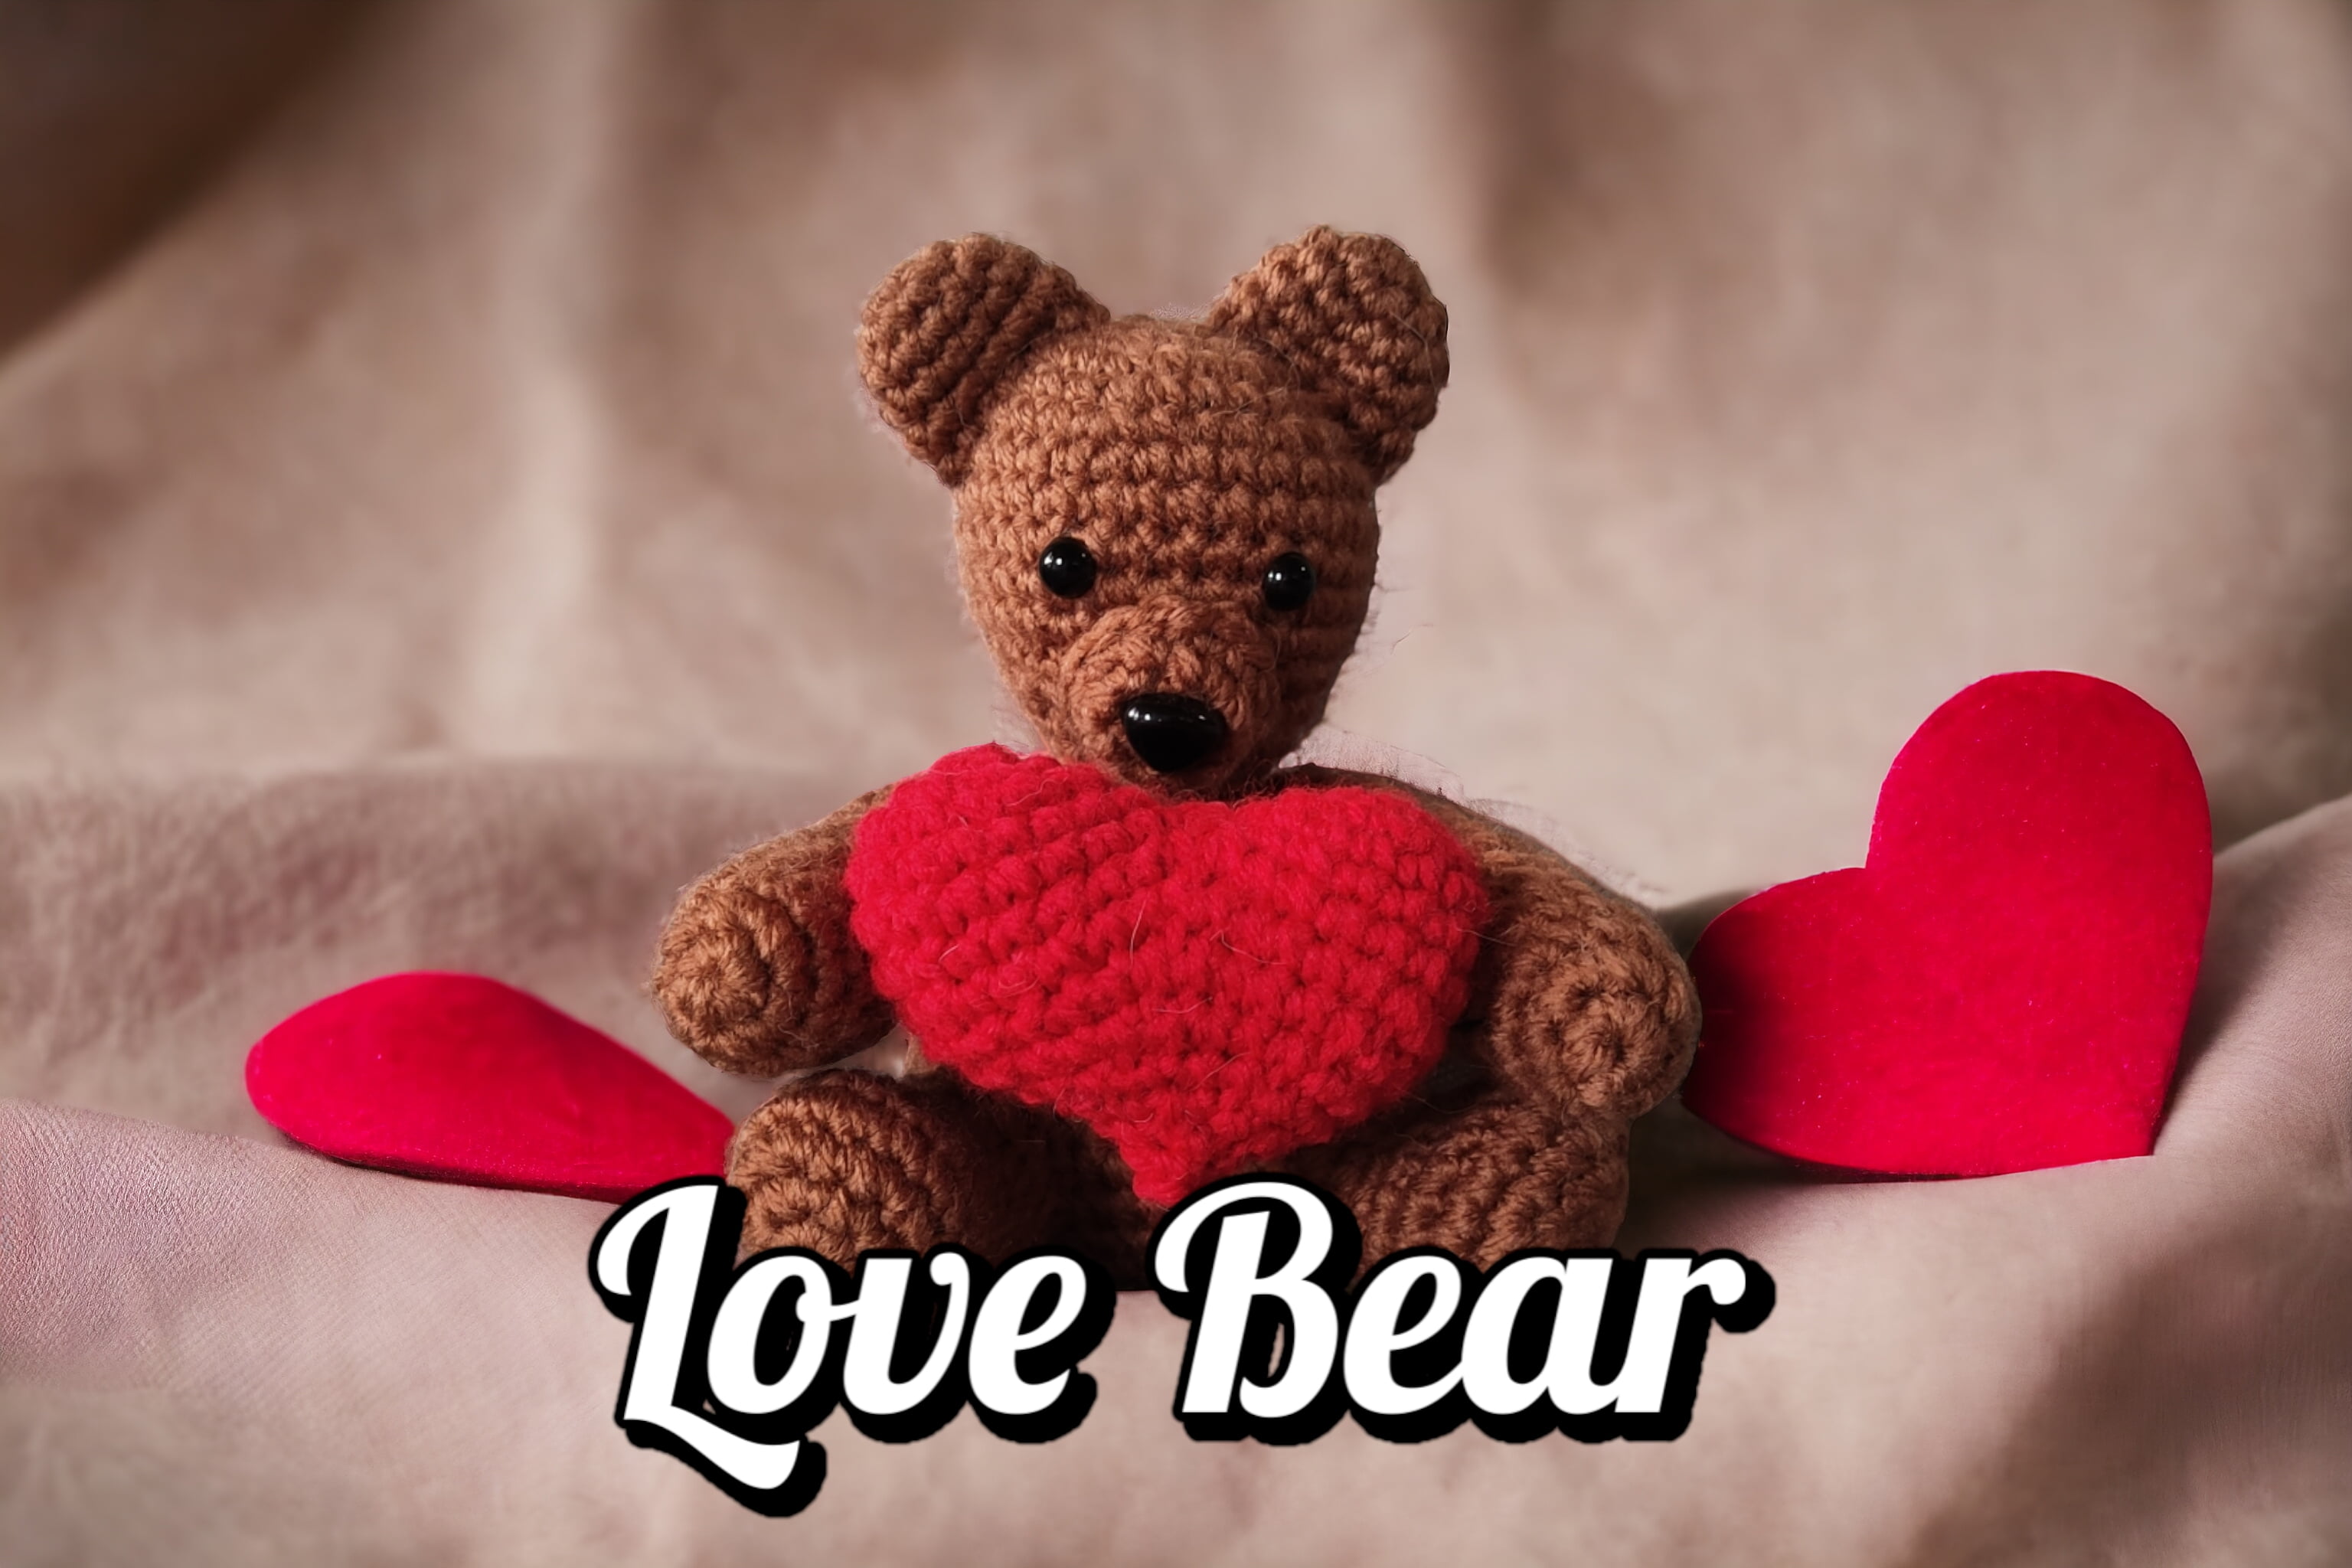 How to Make a Love Bear